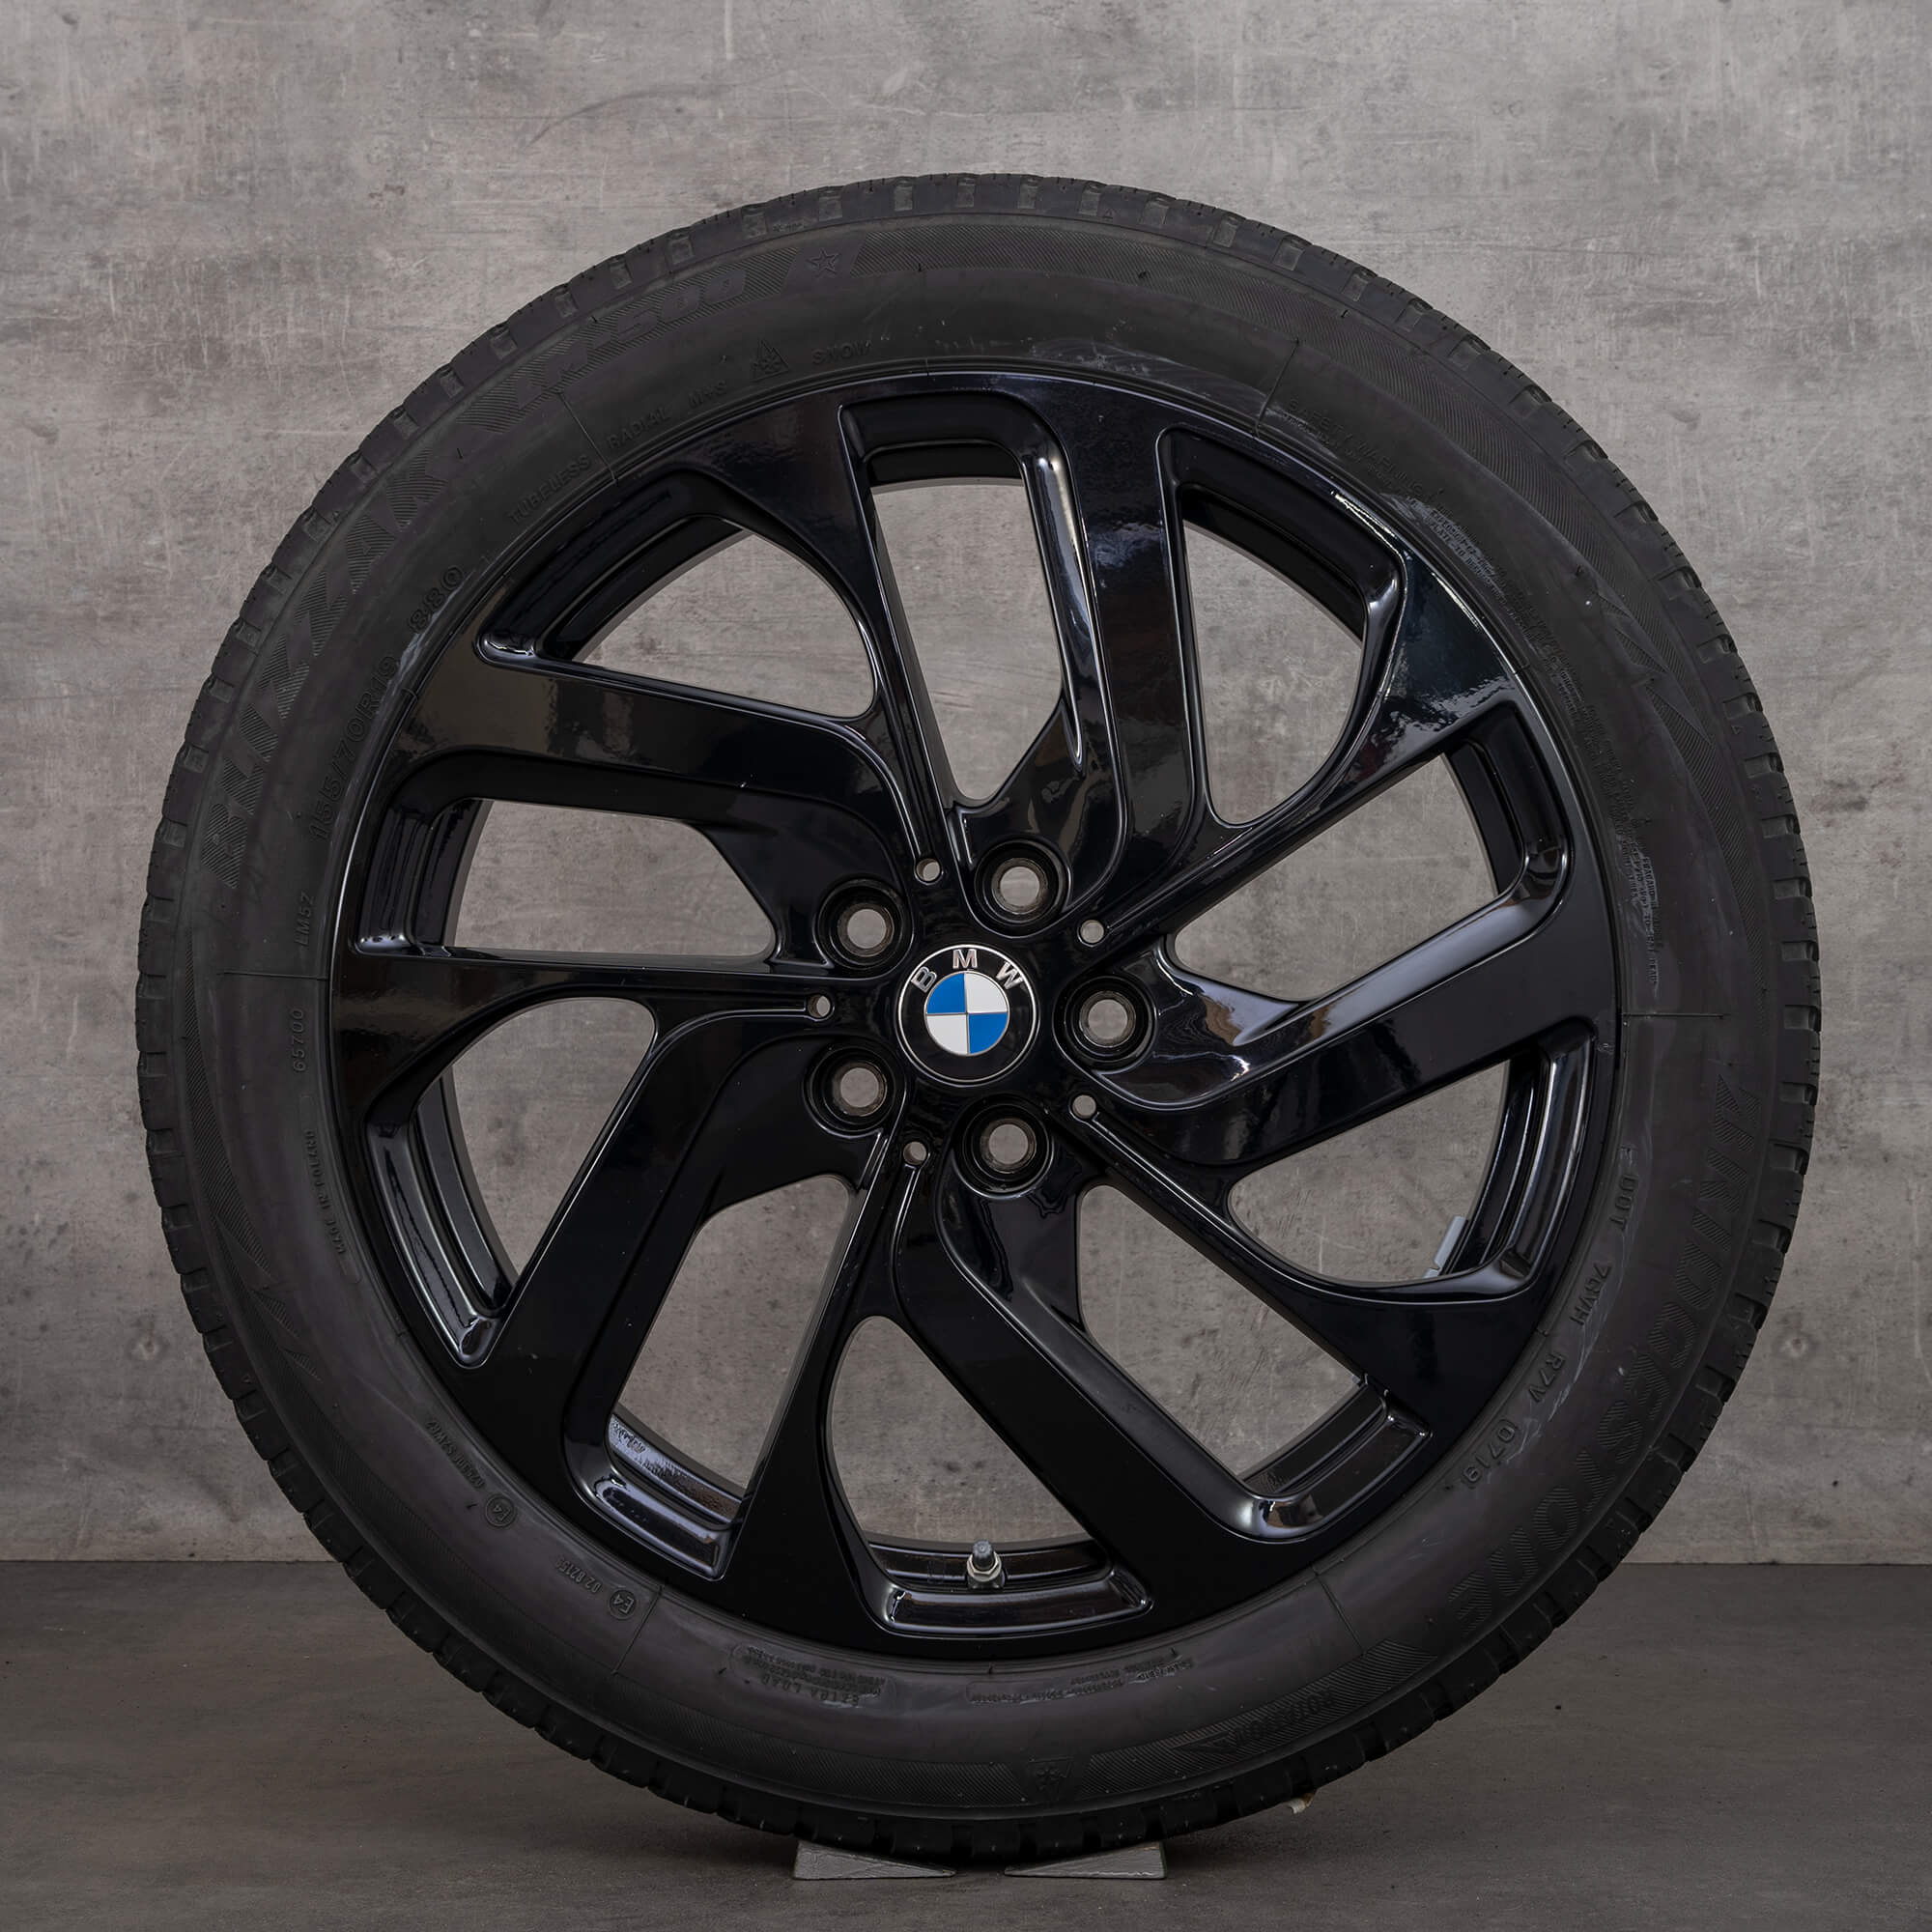 BMW i3s I01 winter tires turbine styling 428 19 inch rims 6887937 wheels